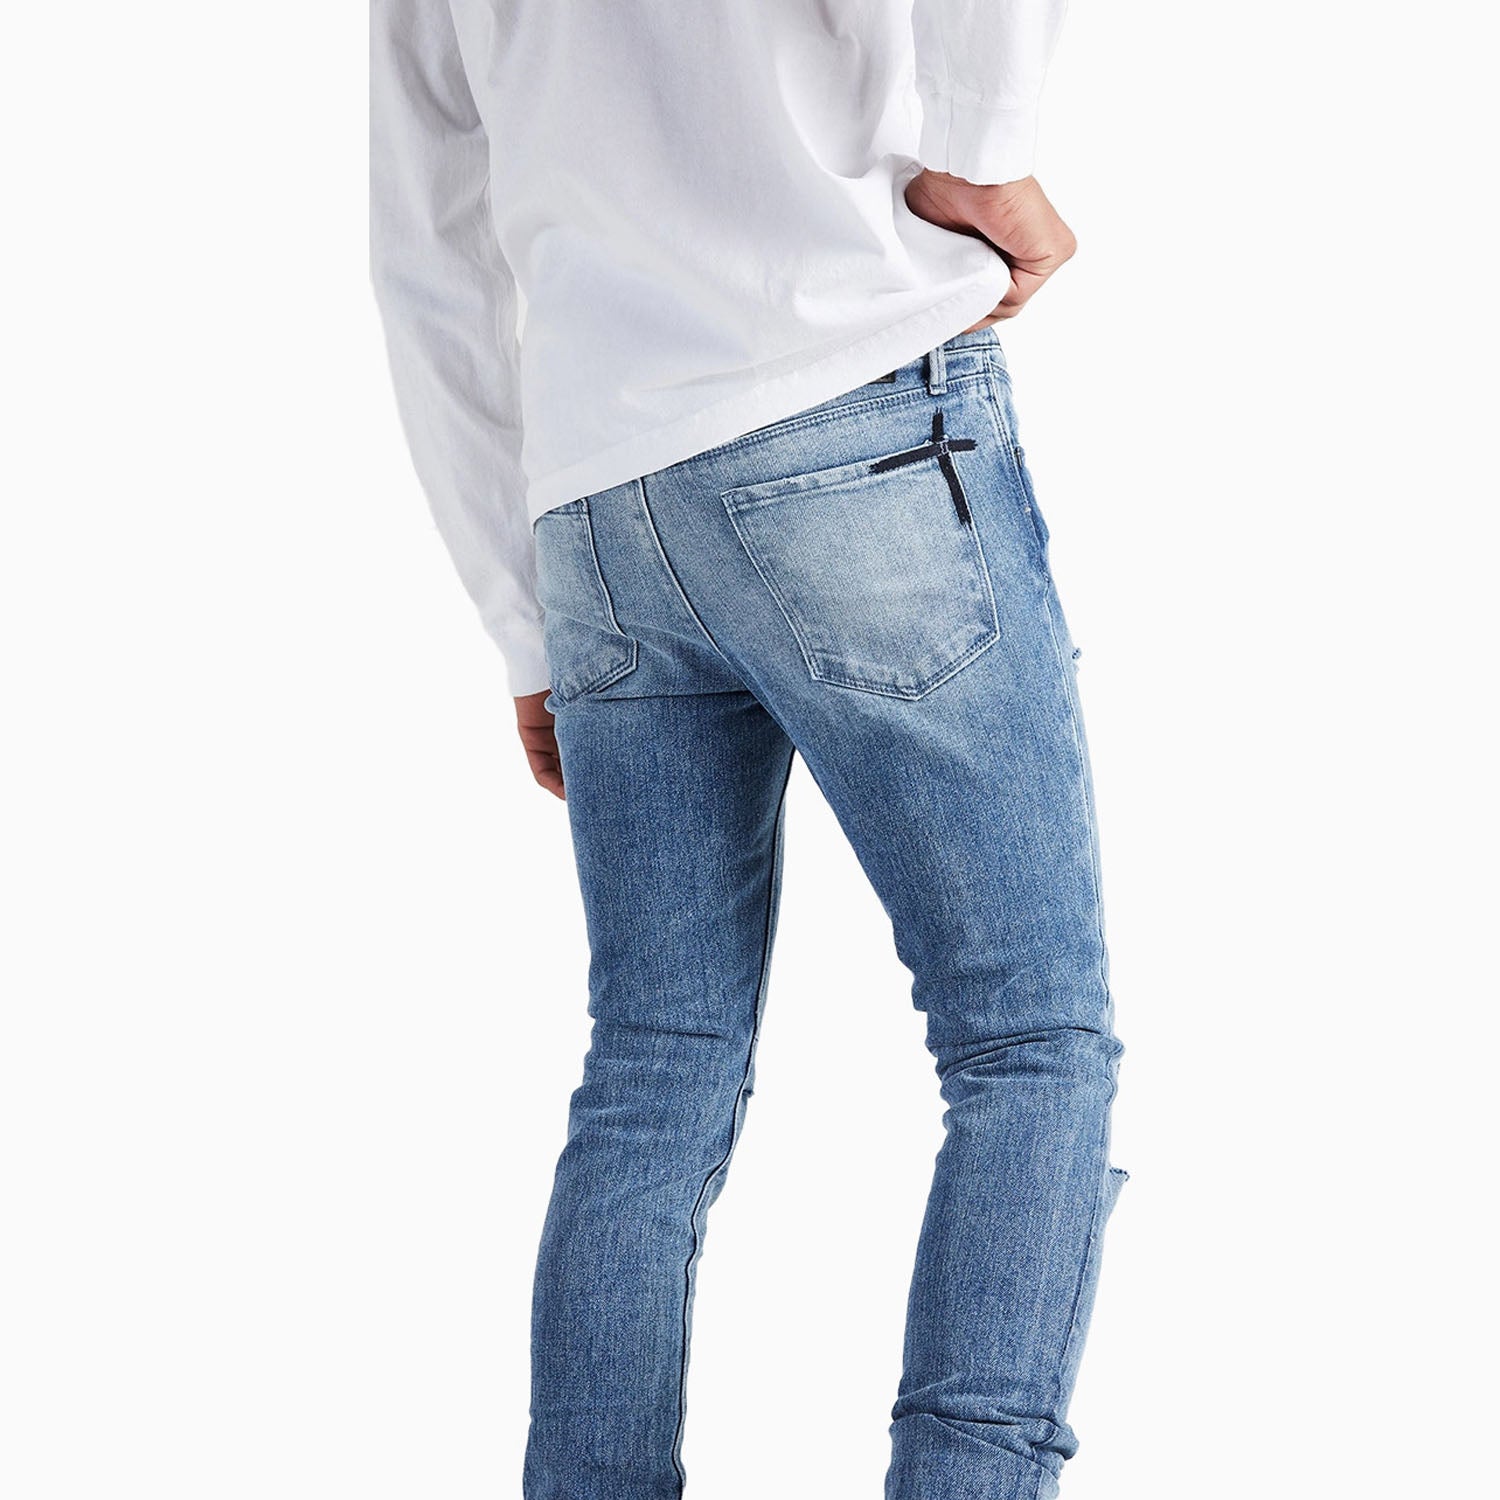 rta-mens-bryant-skinny-denim-jeans-pant-mh24d625-b1205dsvbl